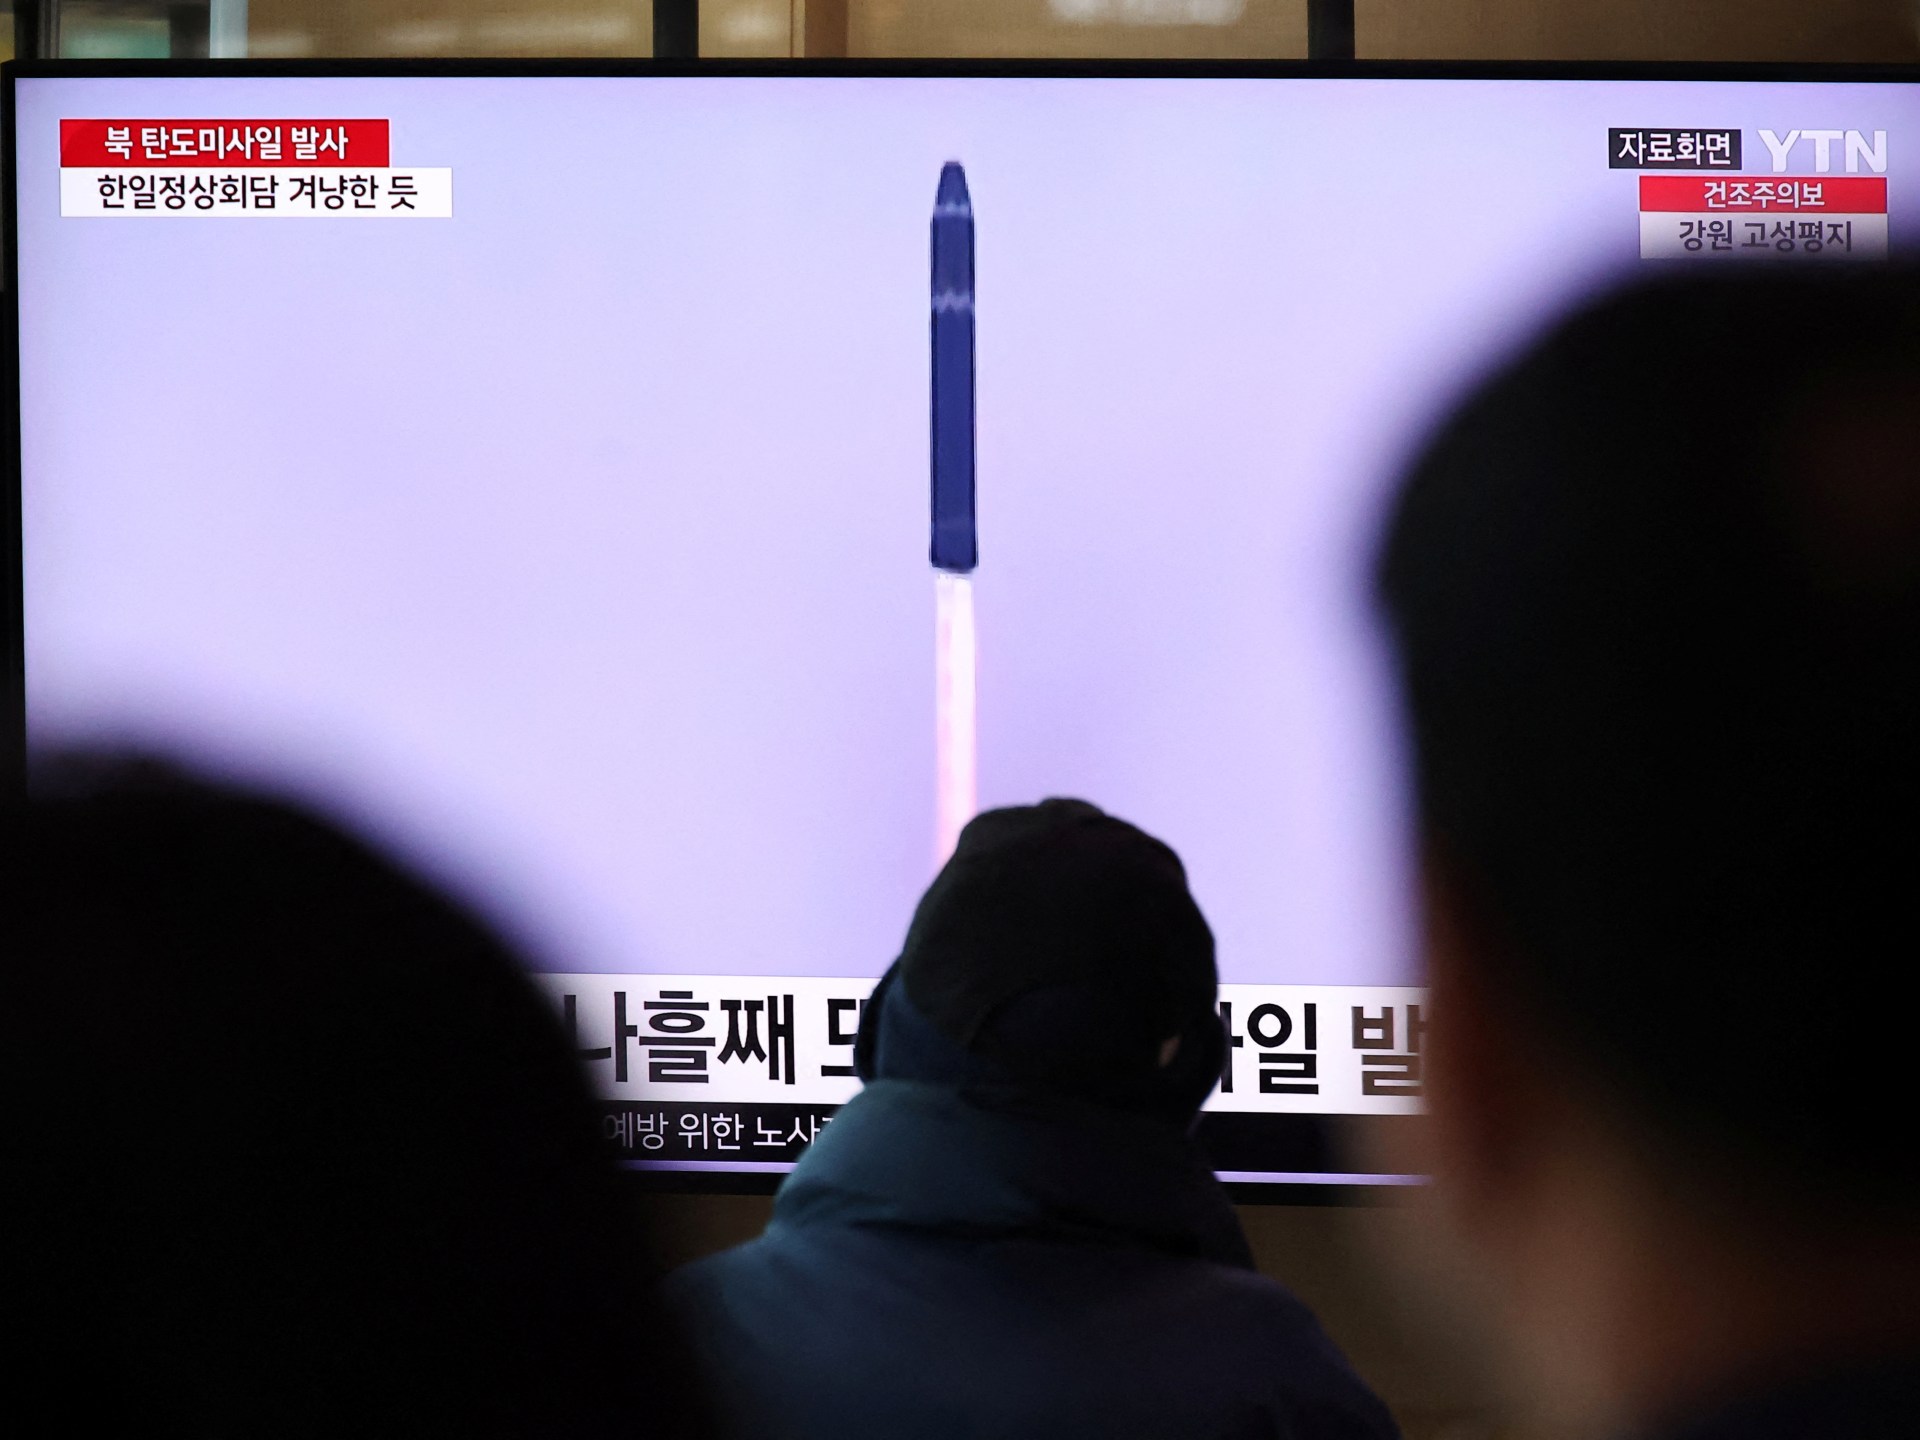 North Korea fires ballistic missile into the sea, say South Korea and Japan